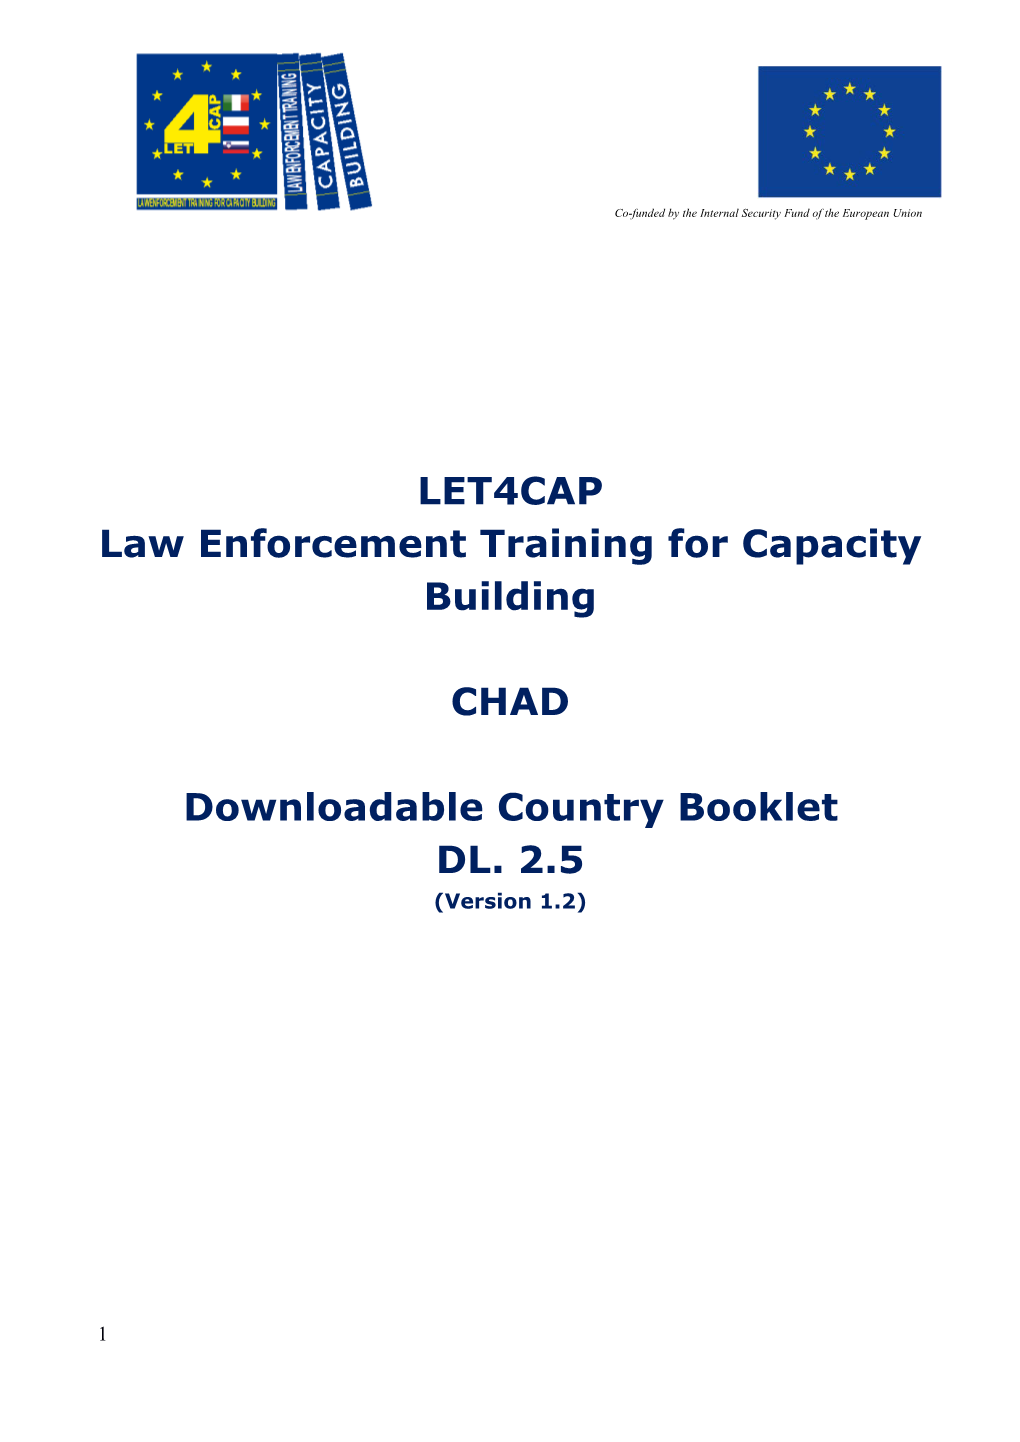 LET4CAP Law Enforcement Training for Capacity Building CHAD